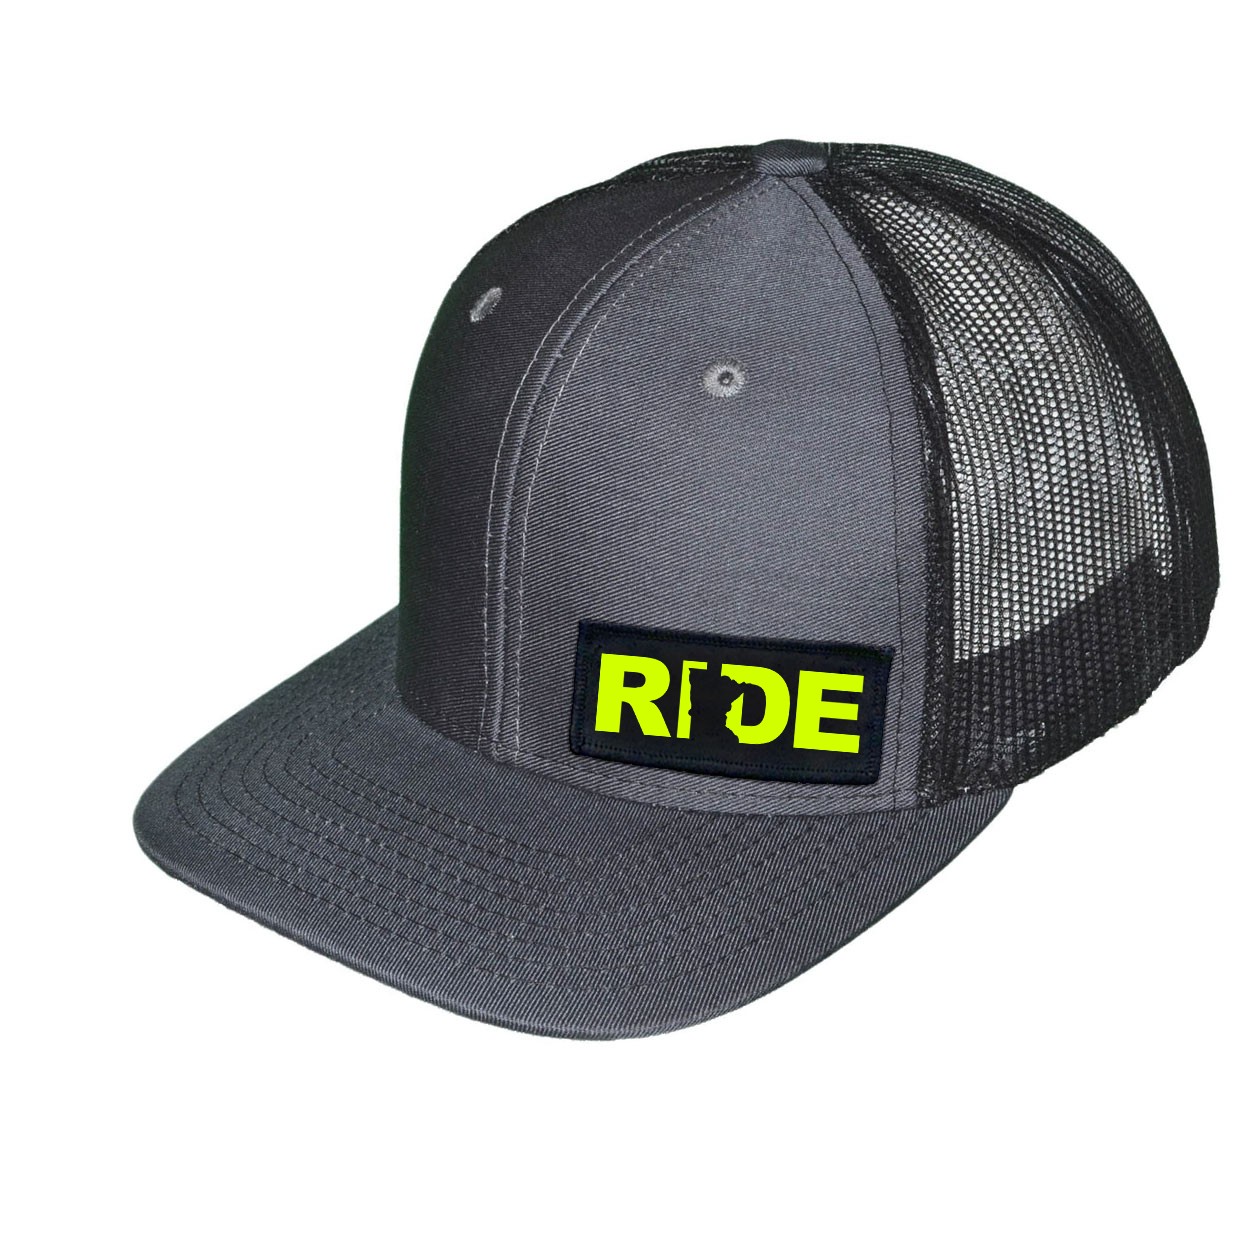 Ride Minnesota Night Out Woven Patch Snapback Trucker Hat Gray/Black (Hi-Vis Logo)